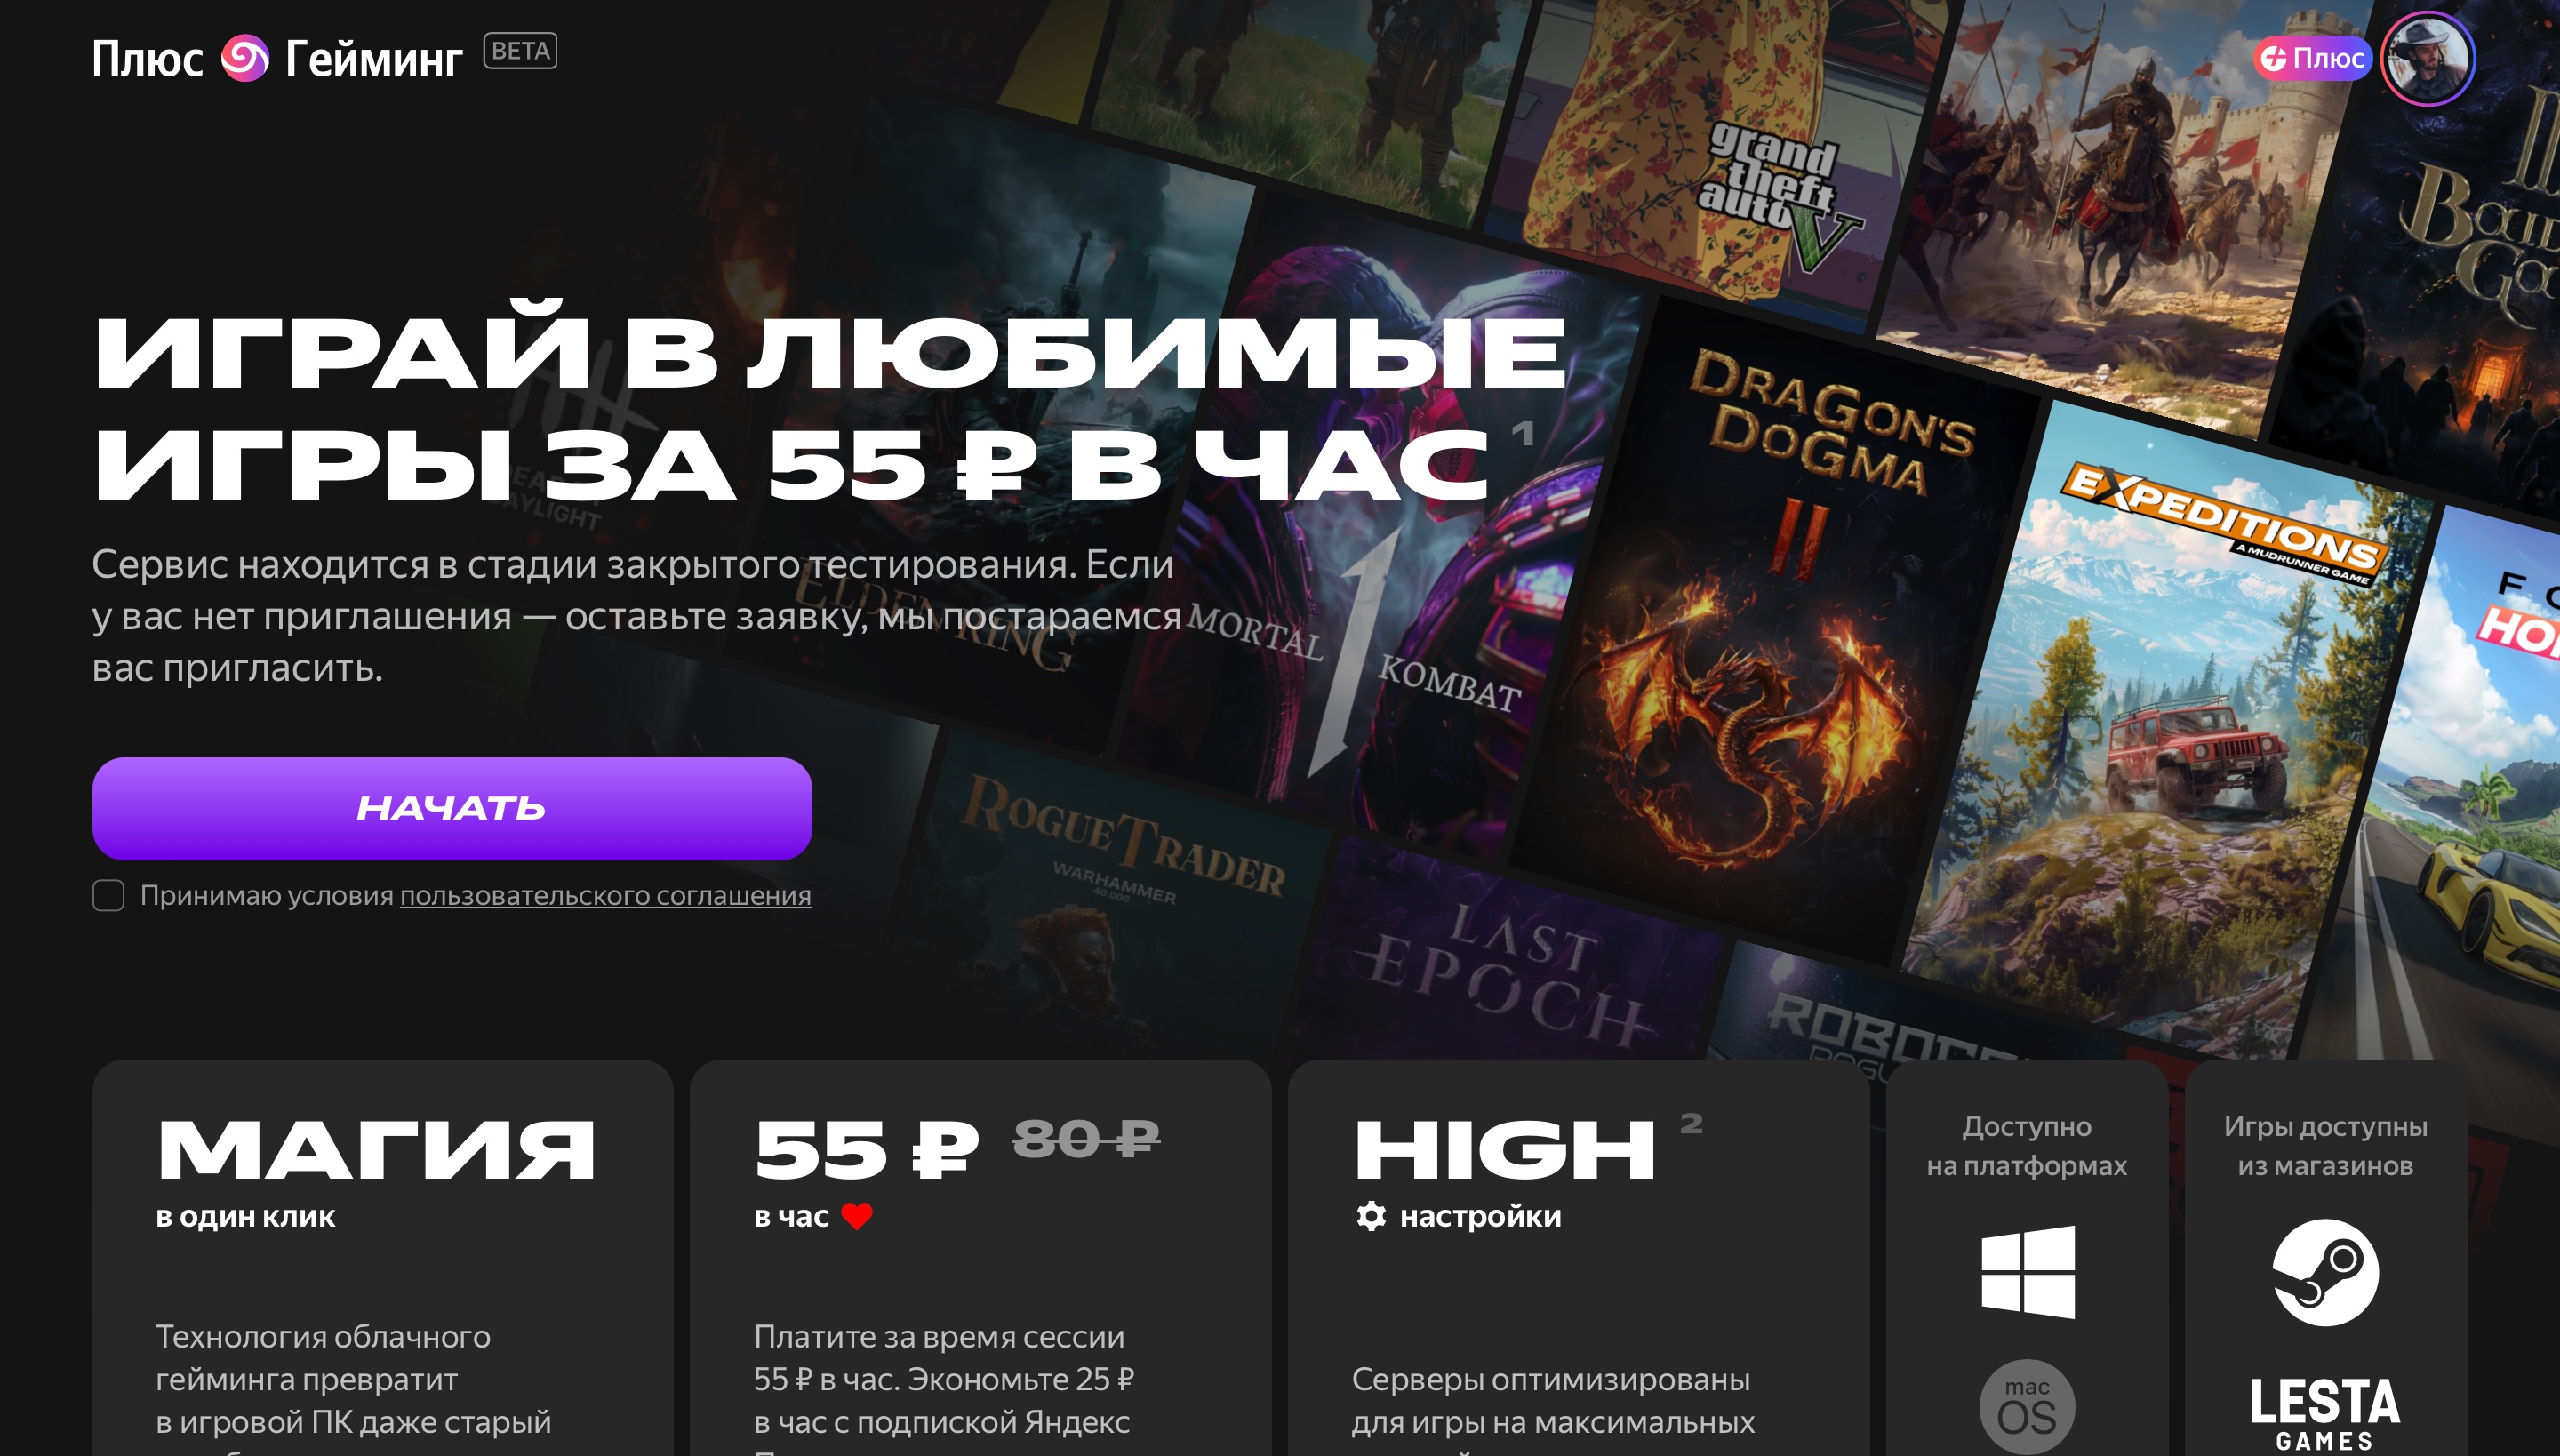 Яндекс запустил свою платформу облачного гейминга